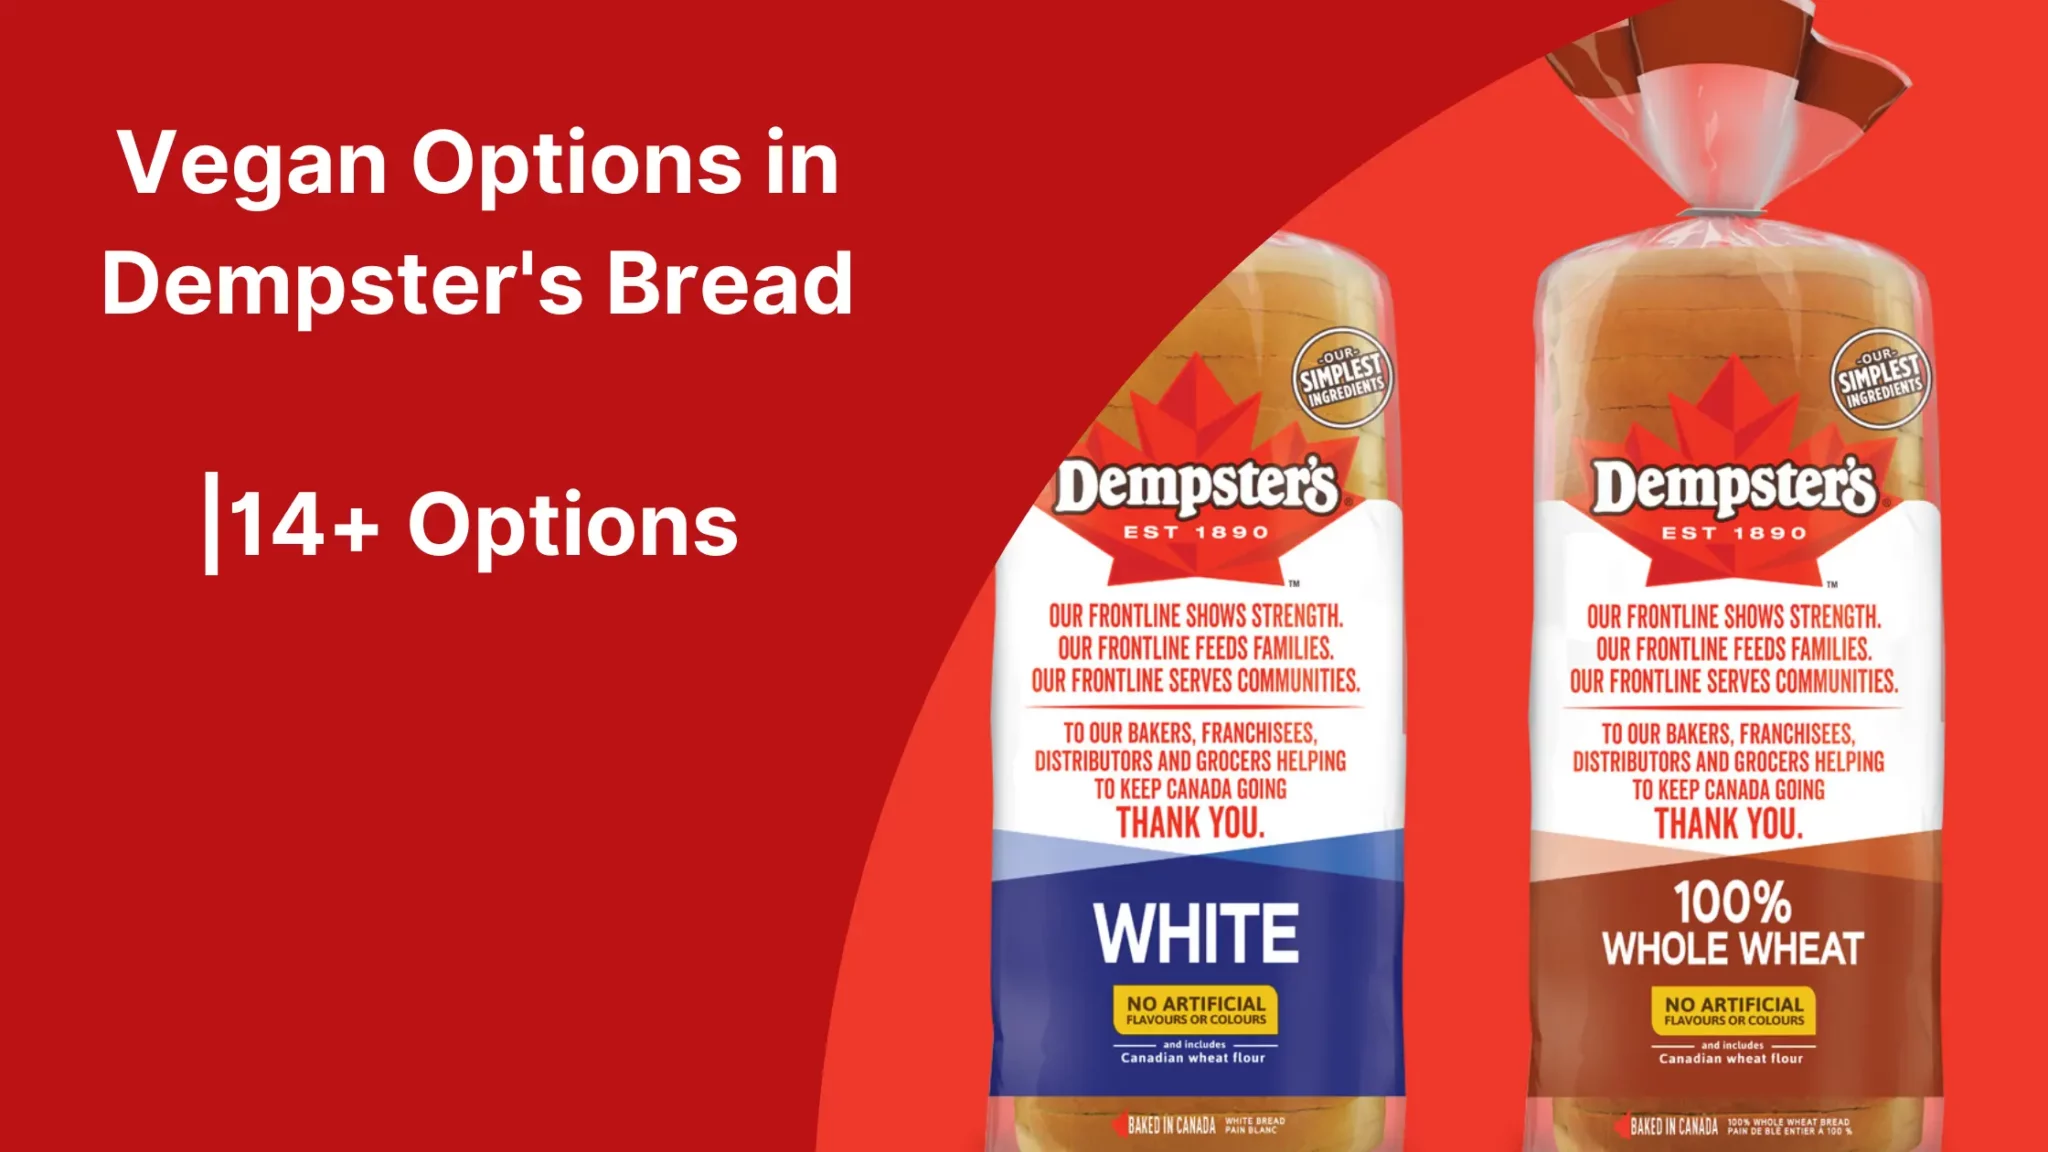 Vegan Options in Dempster's Bread